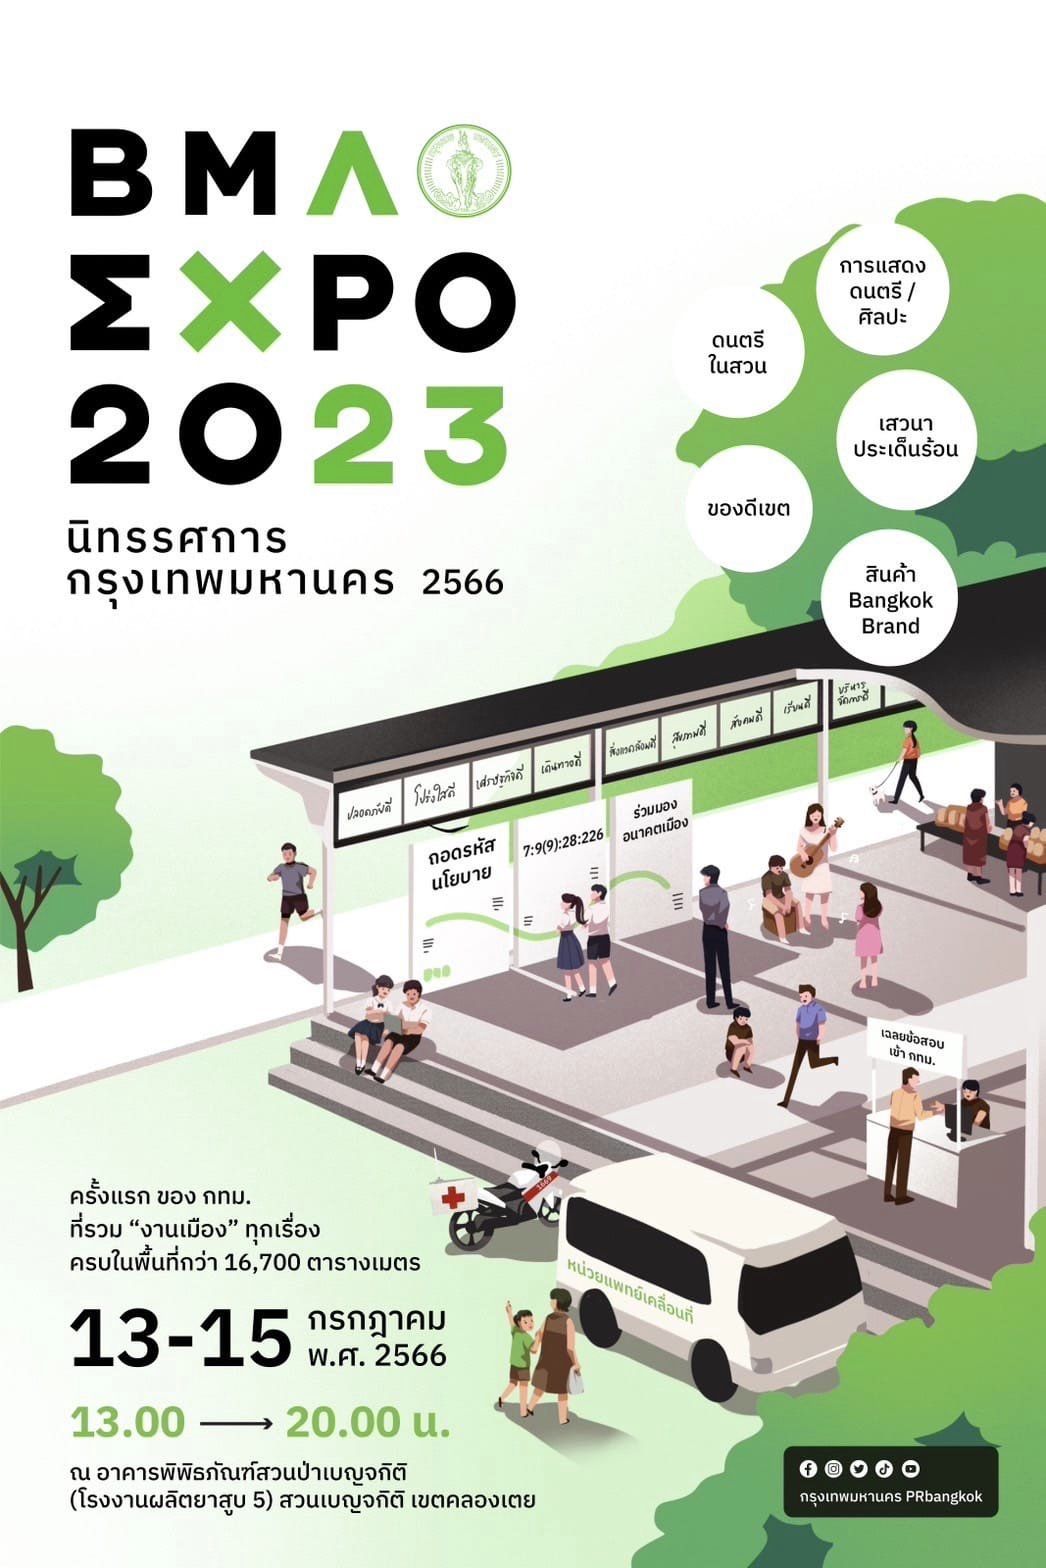 BMA Expo 2023 นิทรรศการงานเมืองครั้งแรกของกรุงเทพมหานคร